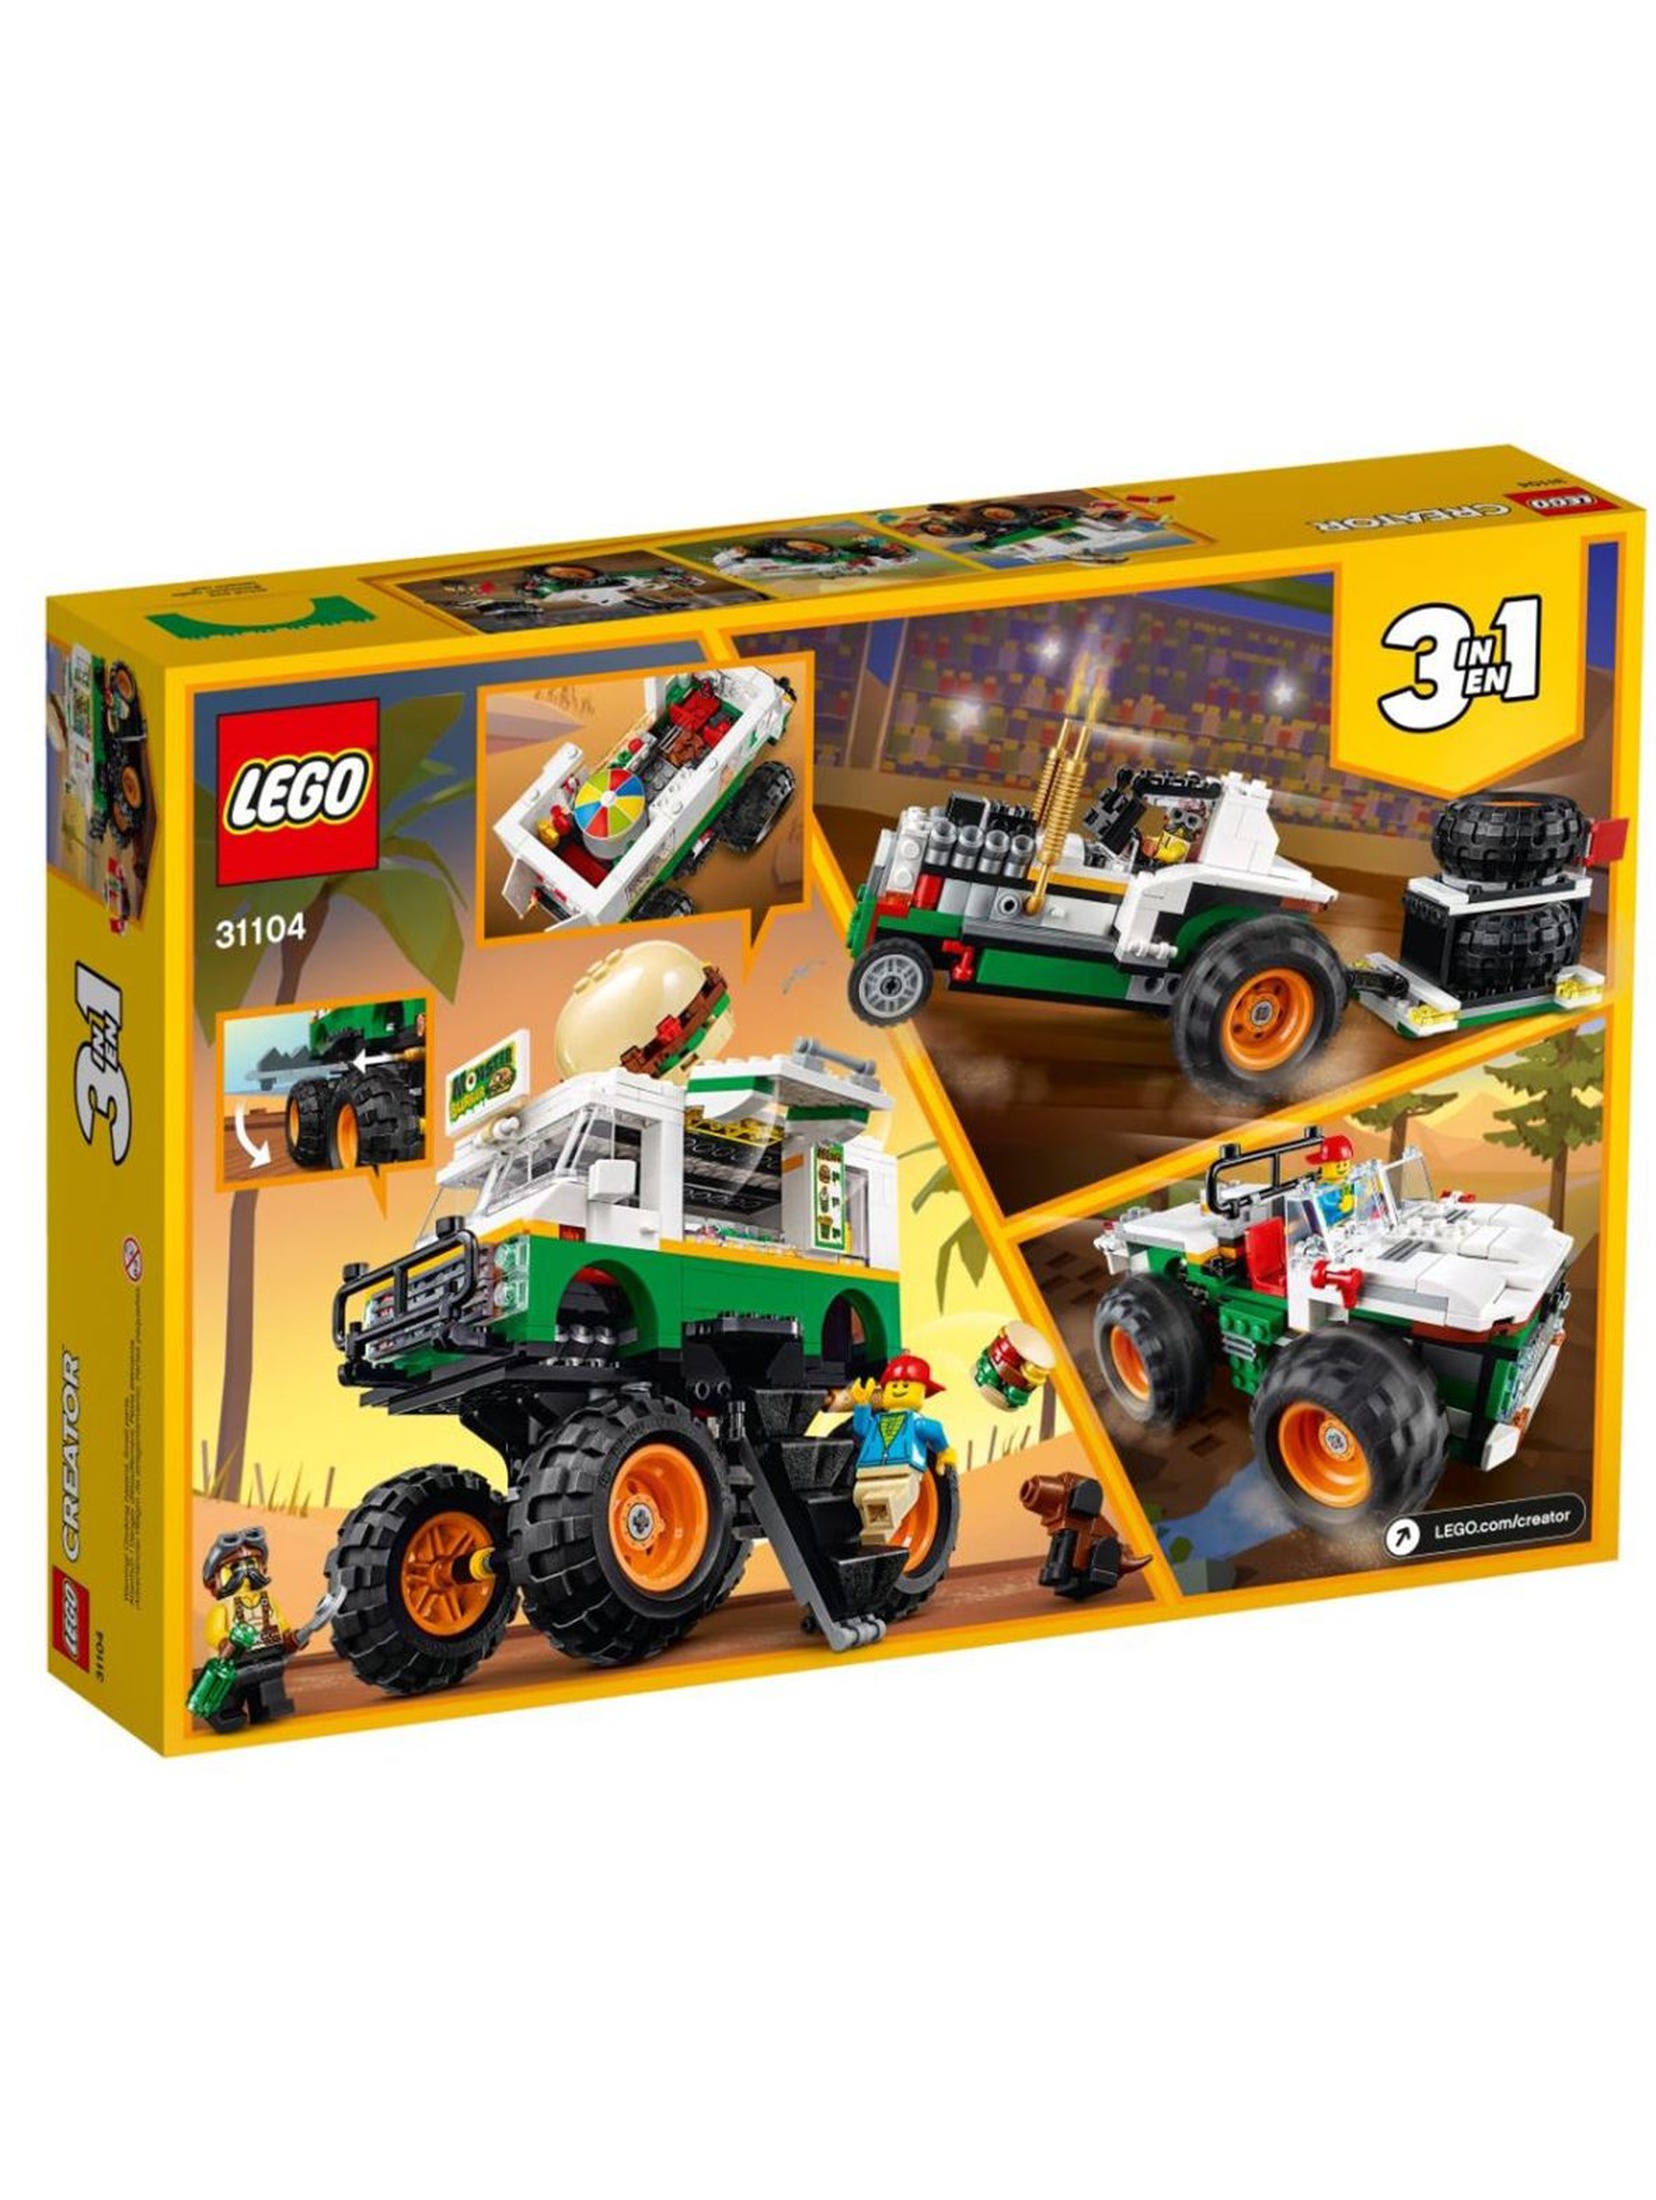 Lego Creator - Monster truck z burgerami - 499 elementy wiek 8+